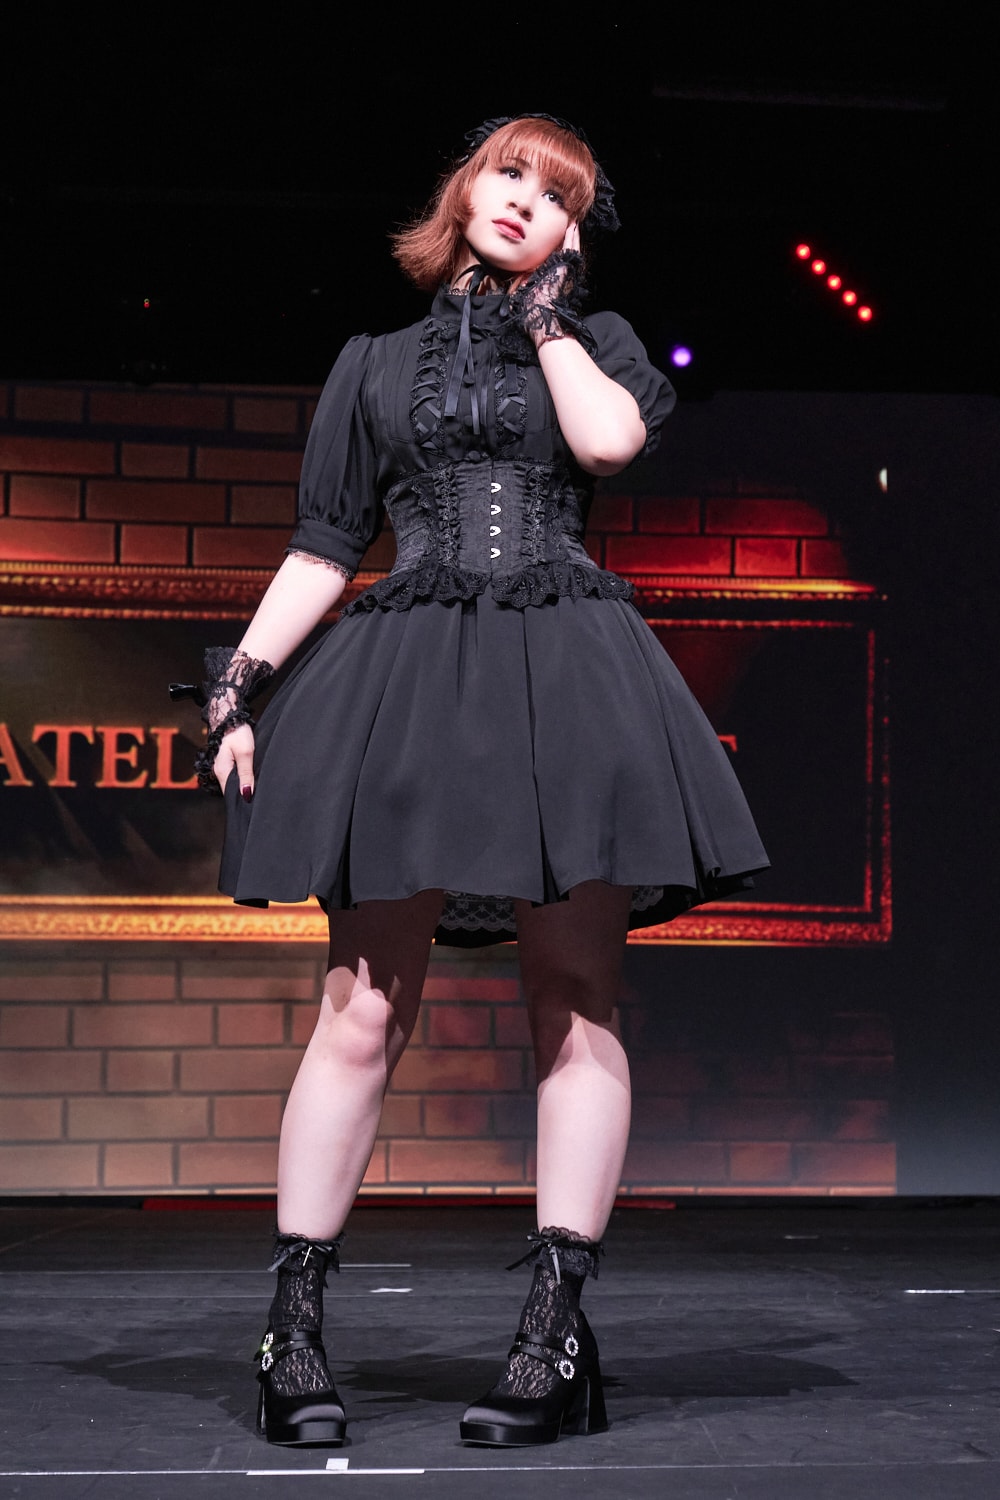 Atelier Pierrot gothic lolita model wearing all black short sleeved dress with black corset - full body standing pose 3.